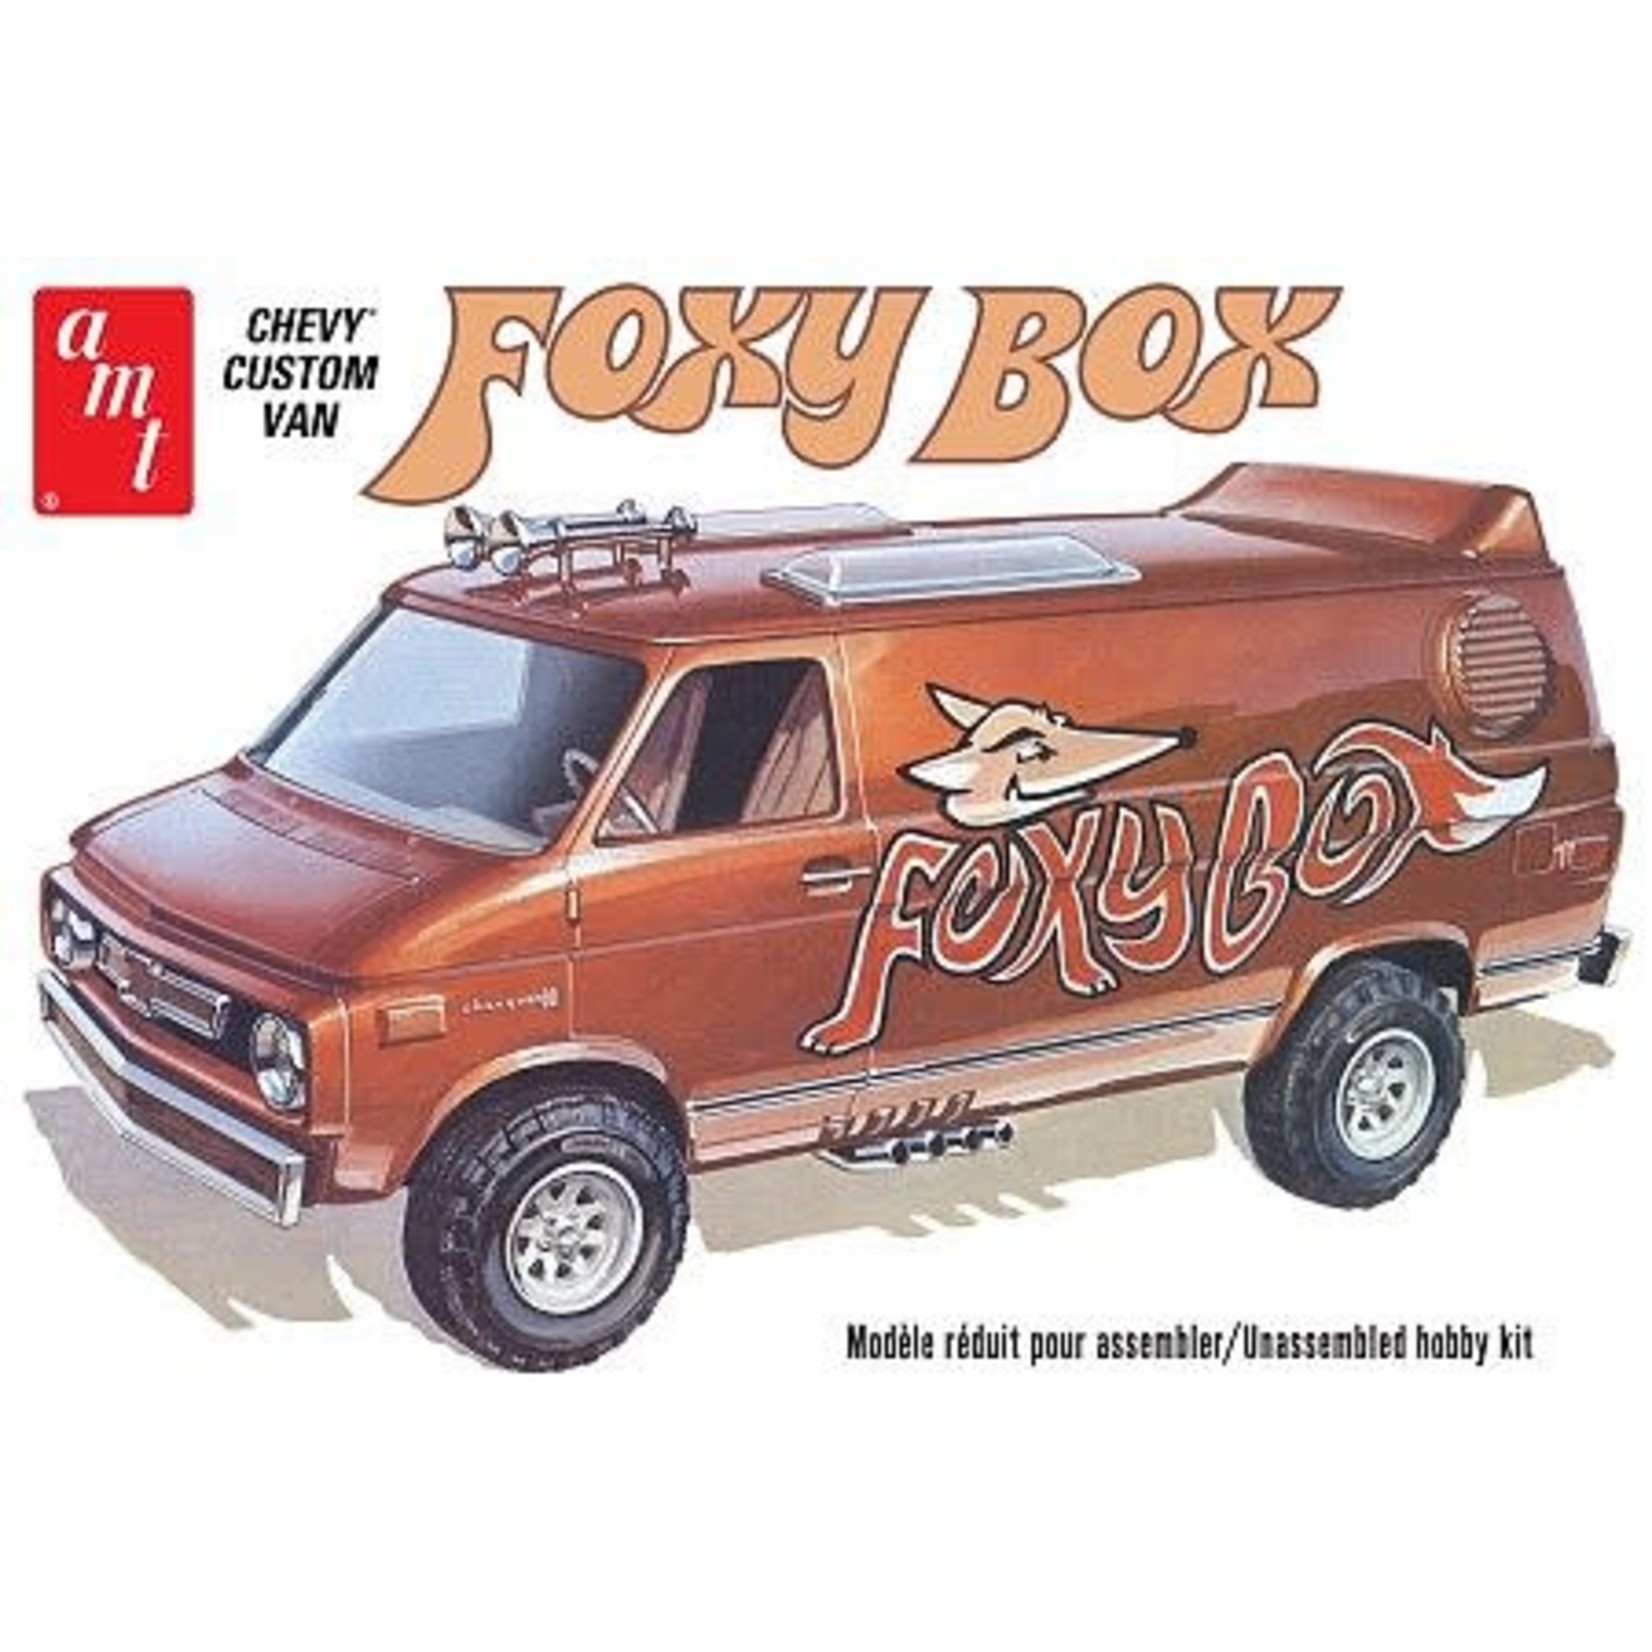 AMT 1975 Chevy Van "Foxy Box" 1:25